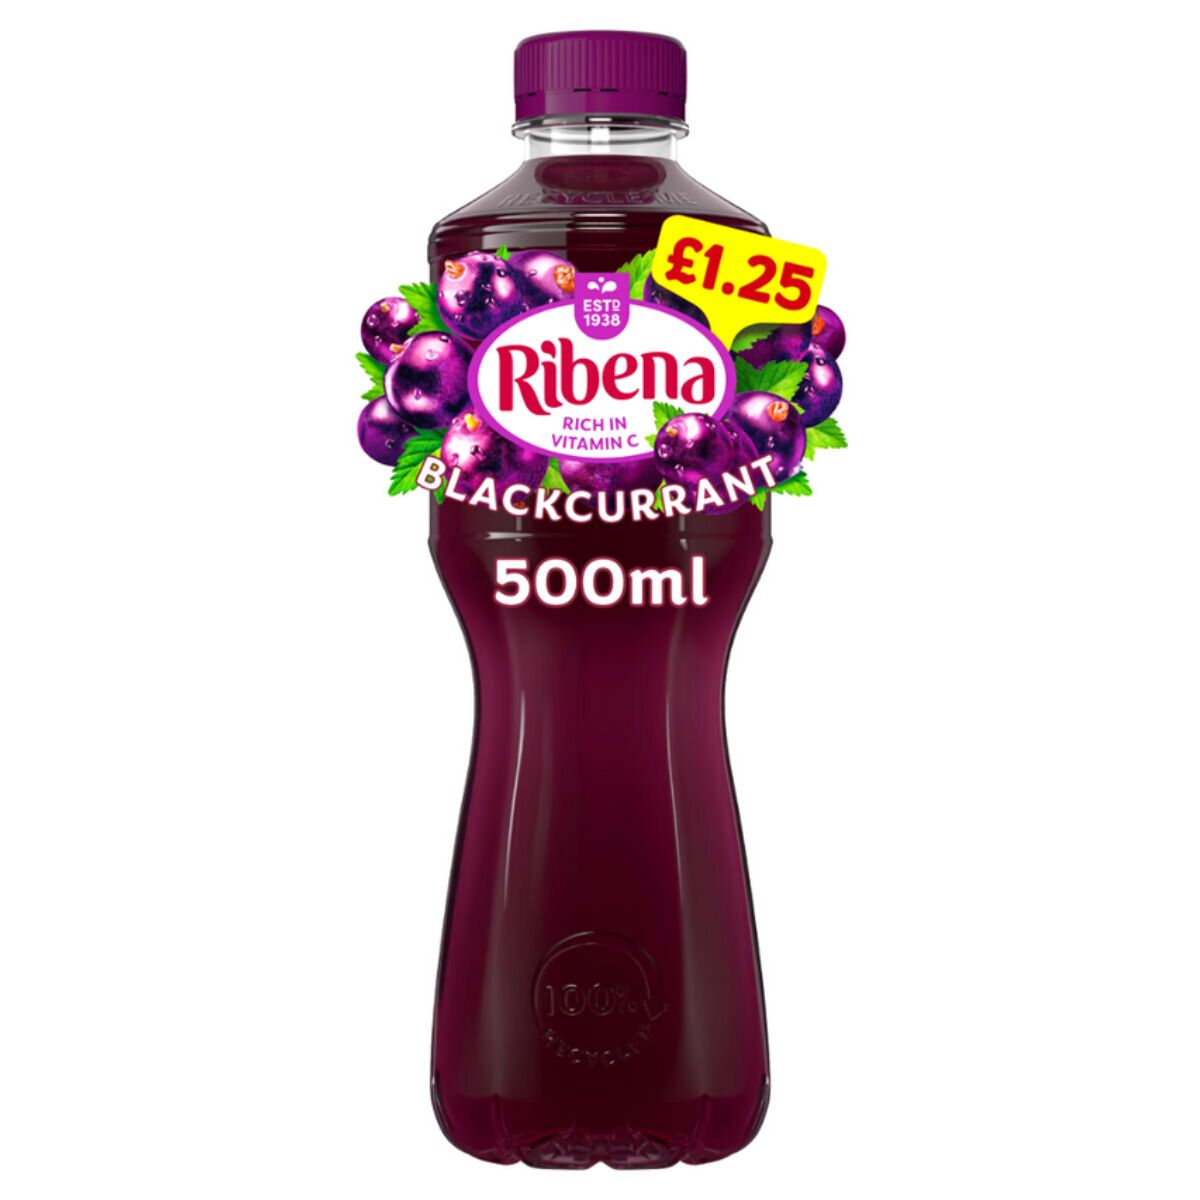 Ribena - Blackcurrant Juice Drink - 500ml